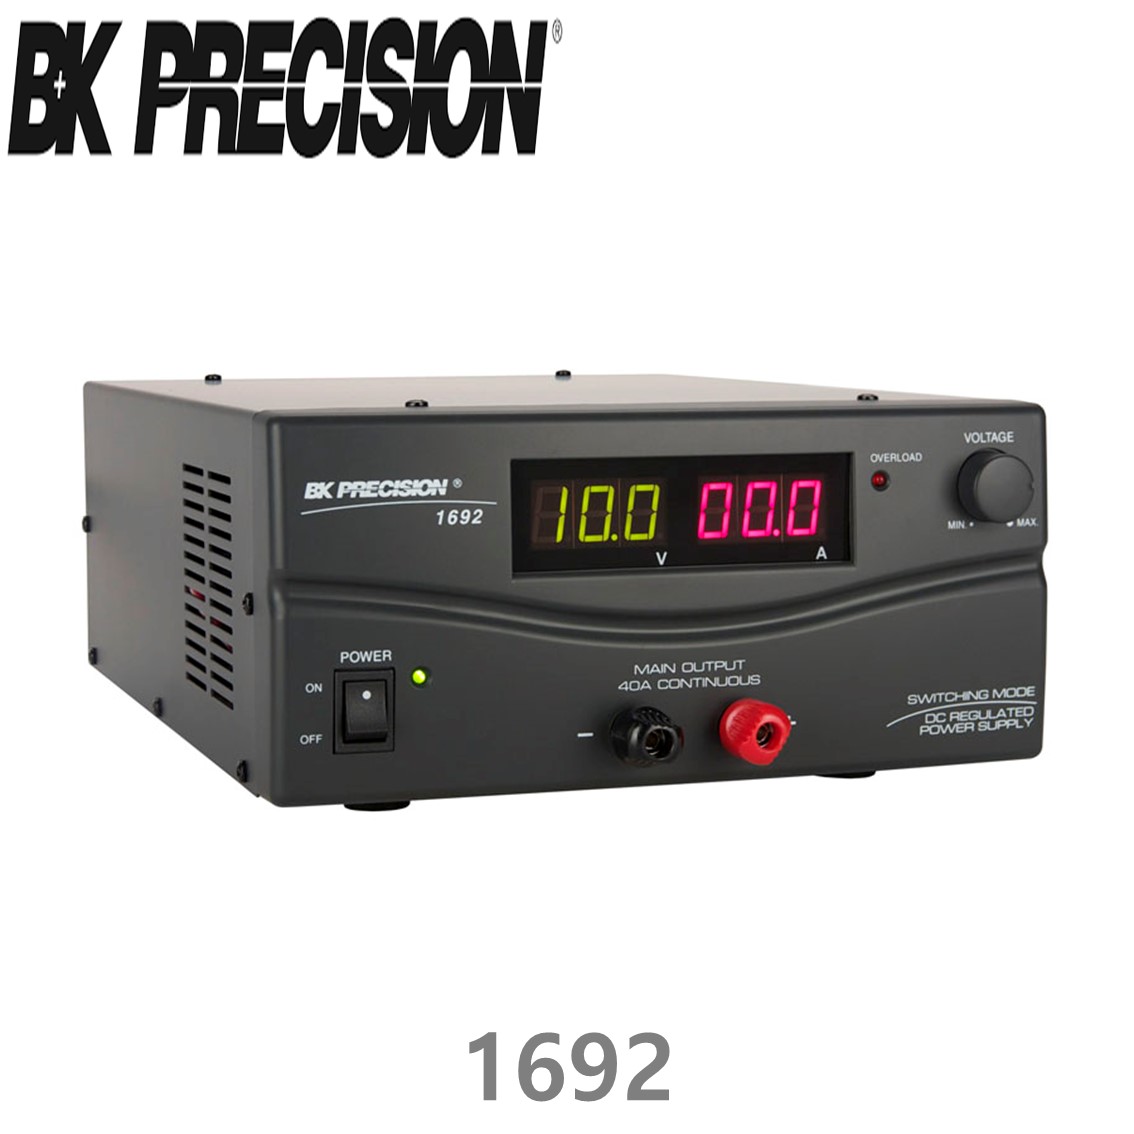 [ BK PRECISION ] BK 1692, 15V/40A, Switching DC Power Supply, DC 전원공급기, B&K 1692, B&K PRECISION 1692-220V